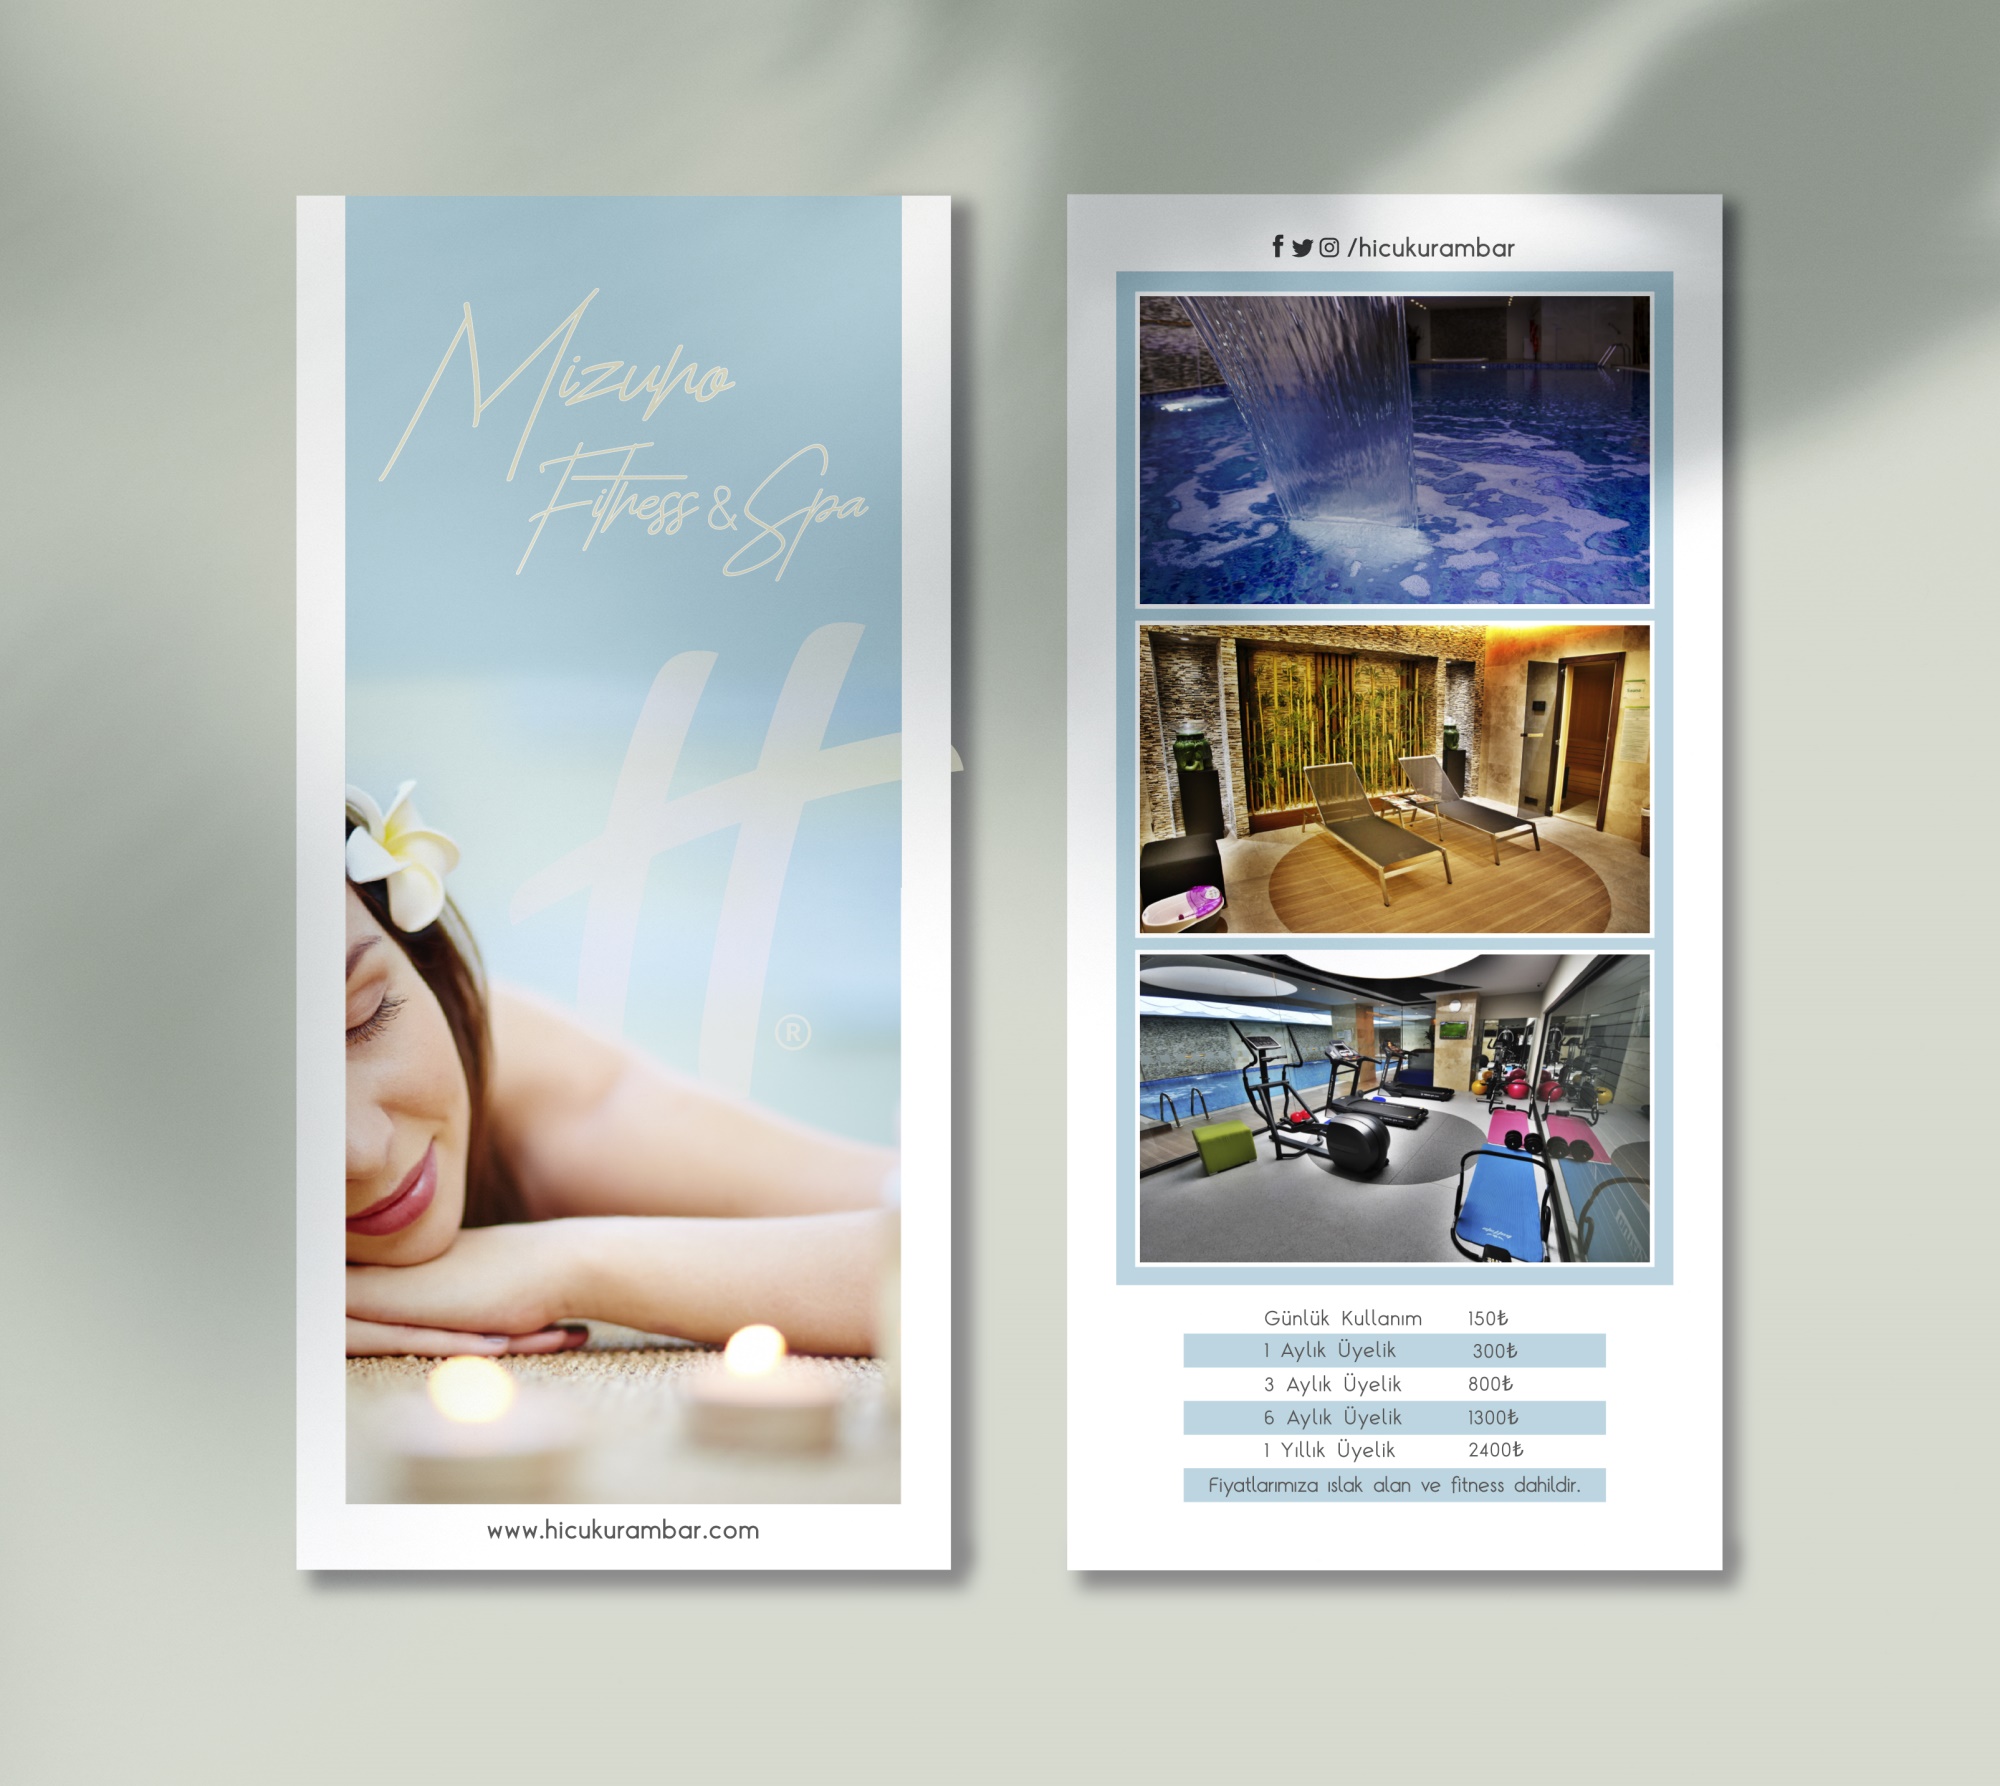 Holiday Inn Brochure